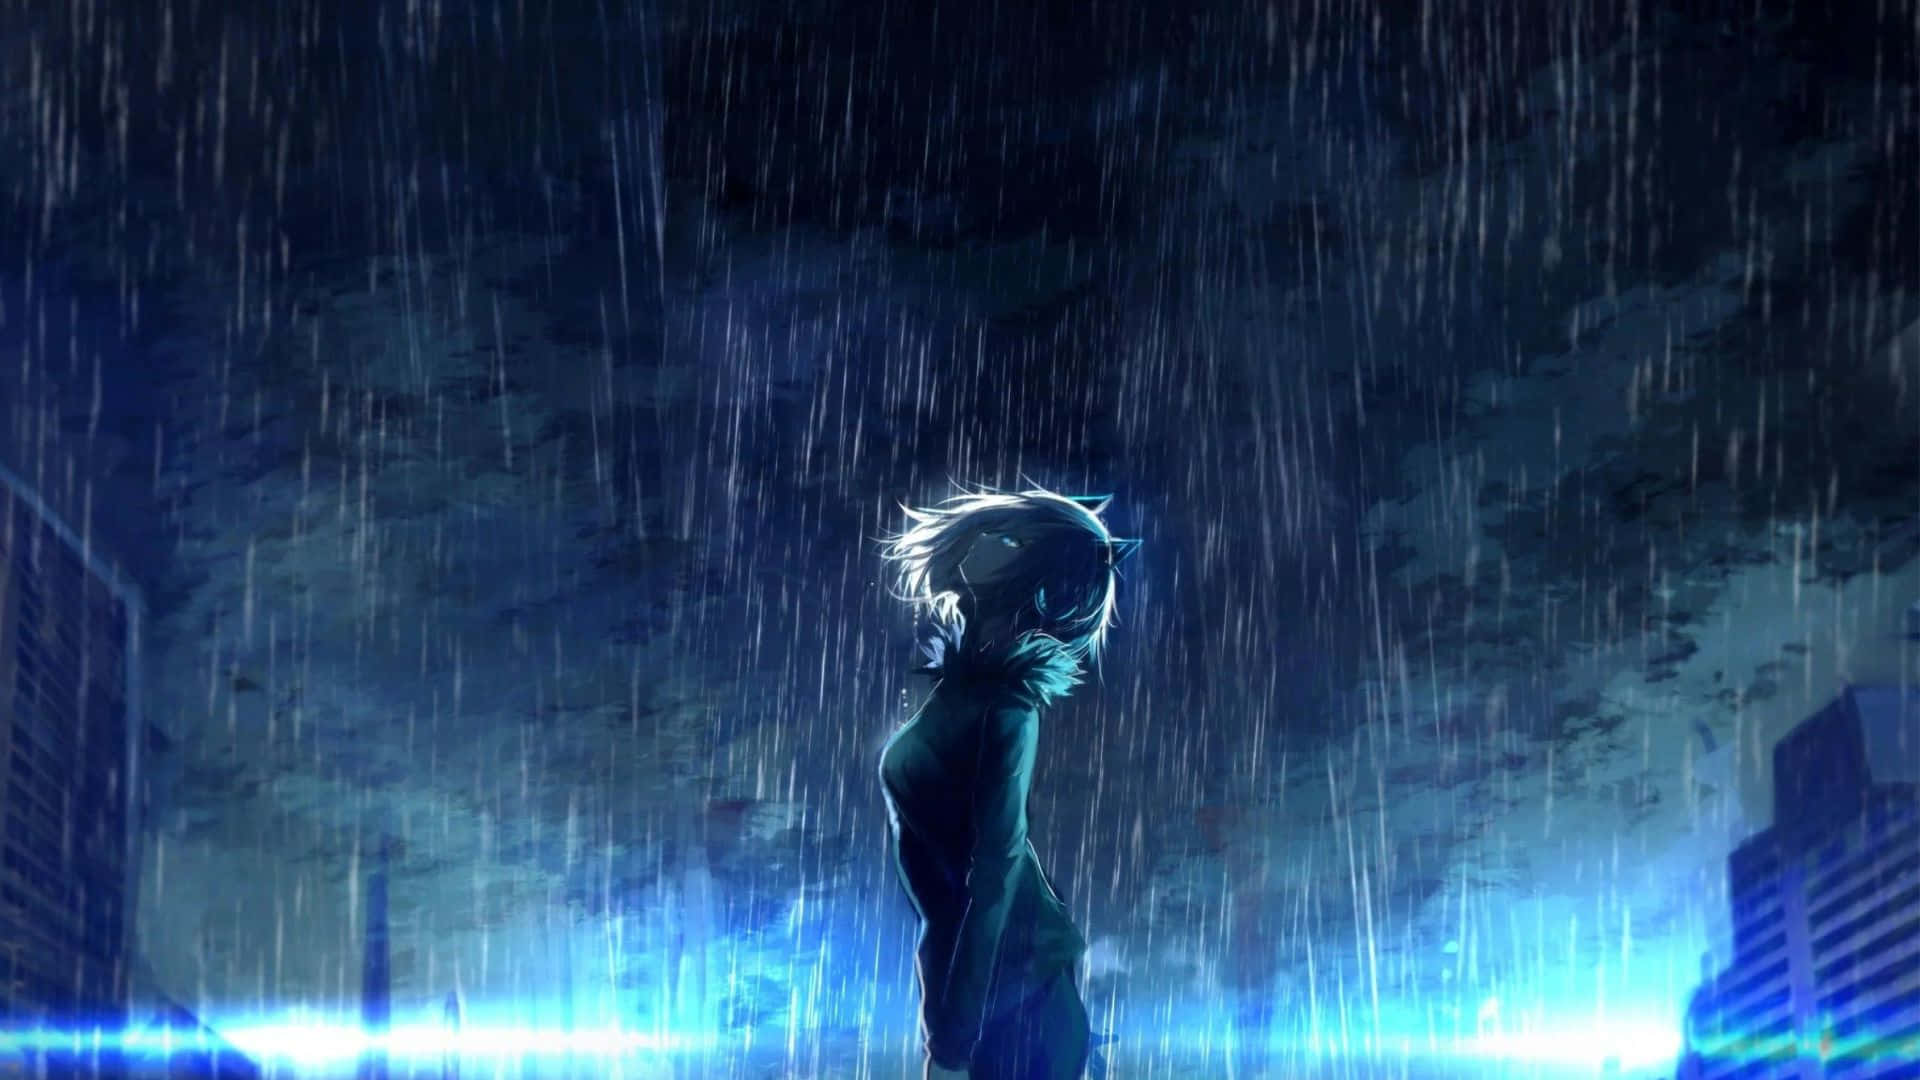 rain - Anime scenery Wallpapers and Images - Desktop Nexus Groups